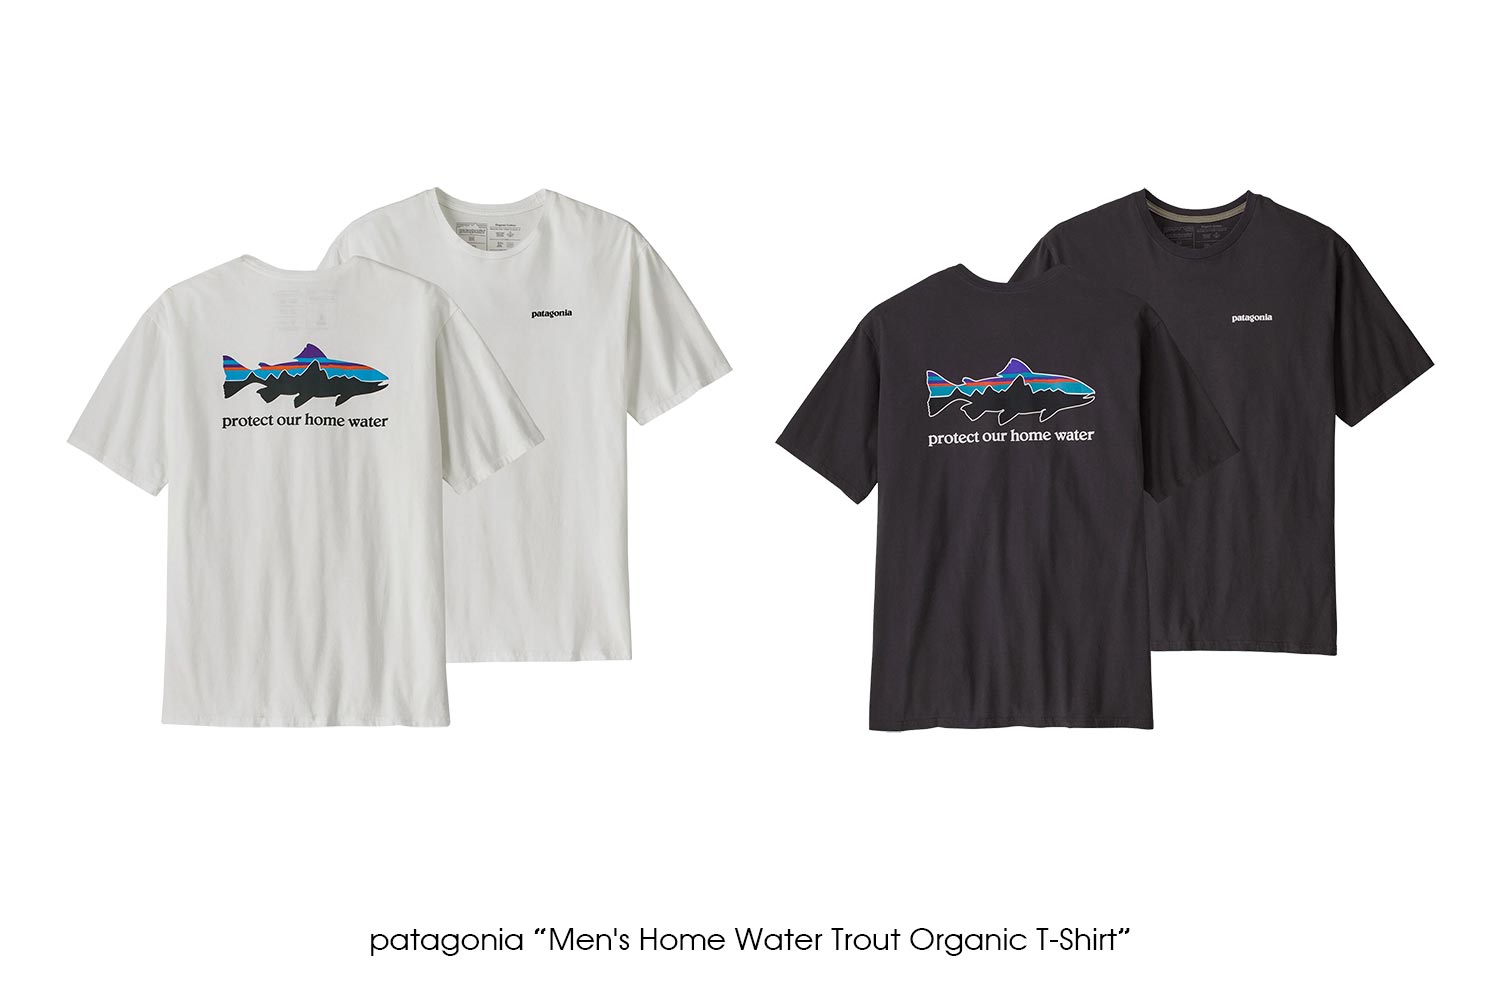 patagonia "Men's Home Water Trout Organic T-Shirt"